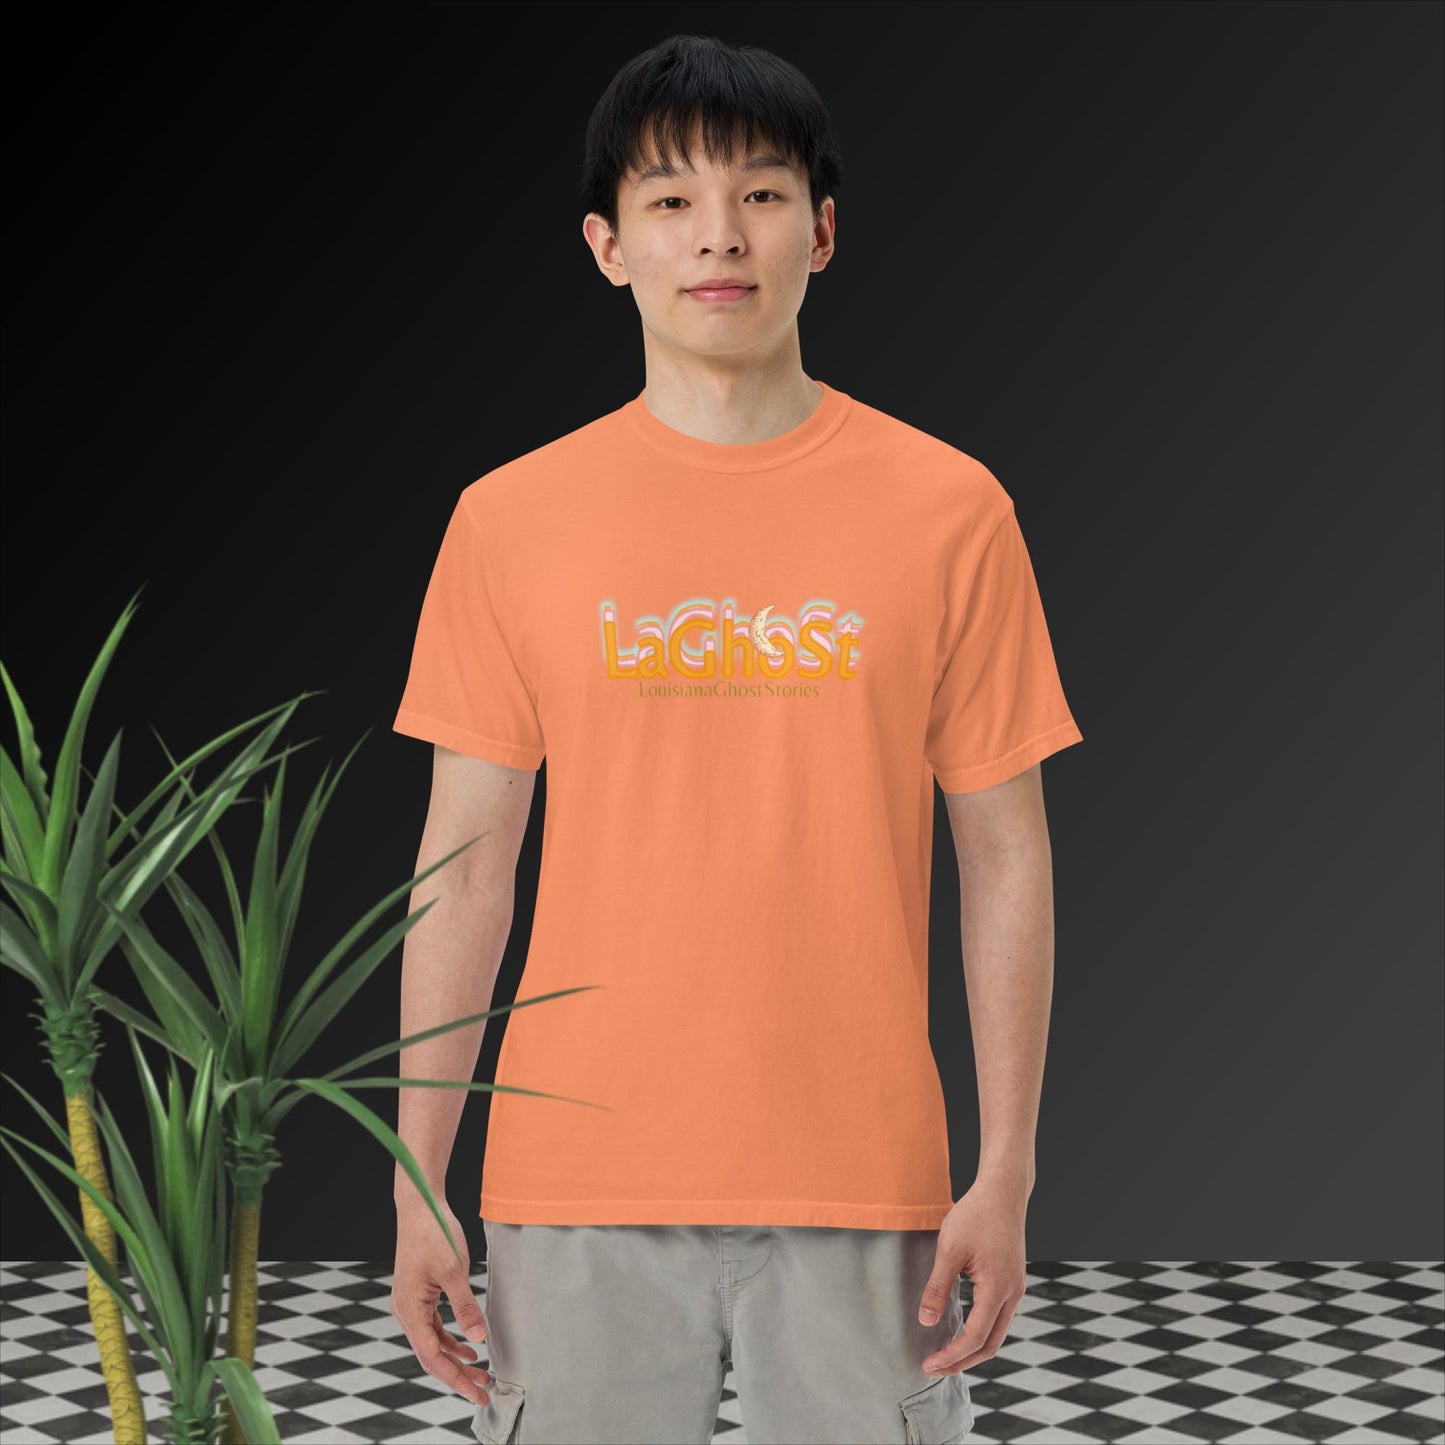 LaGhost Unisex garment-dyed heavyweight t-shirt